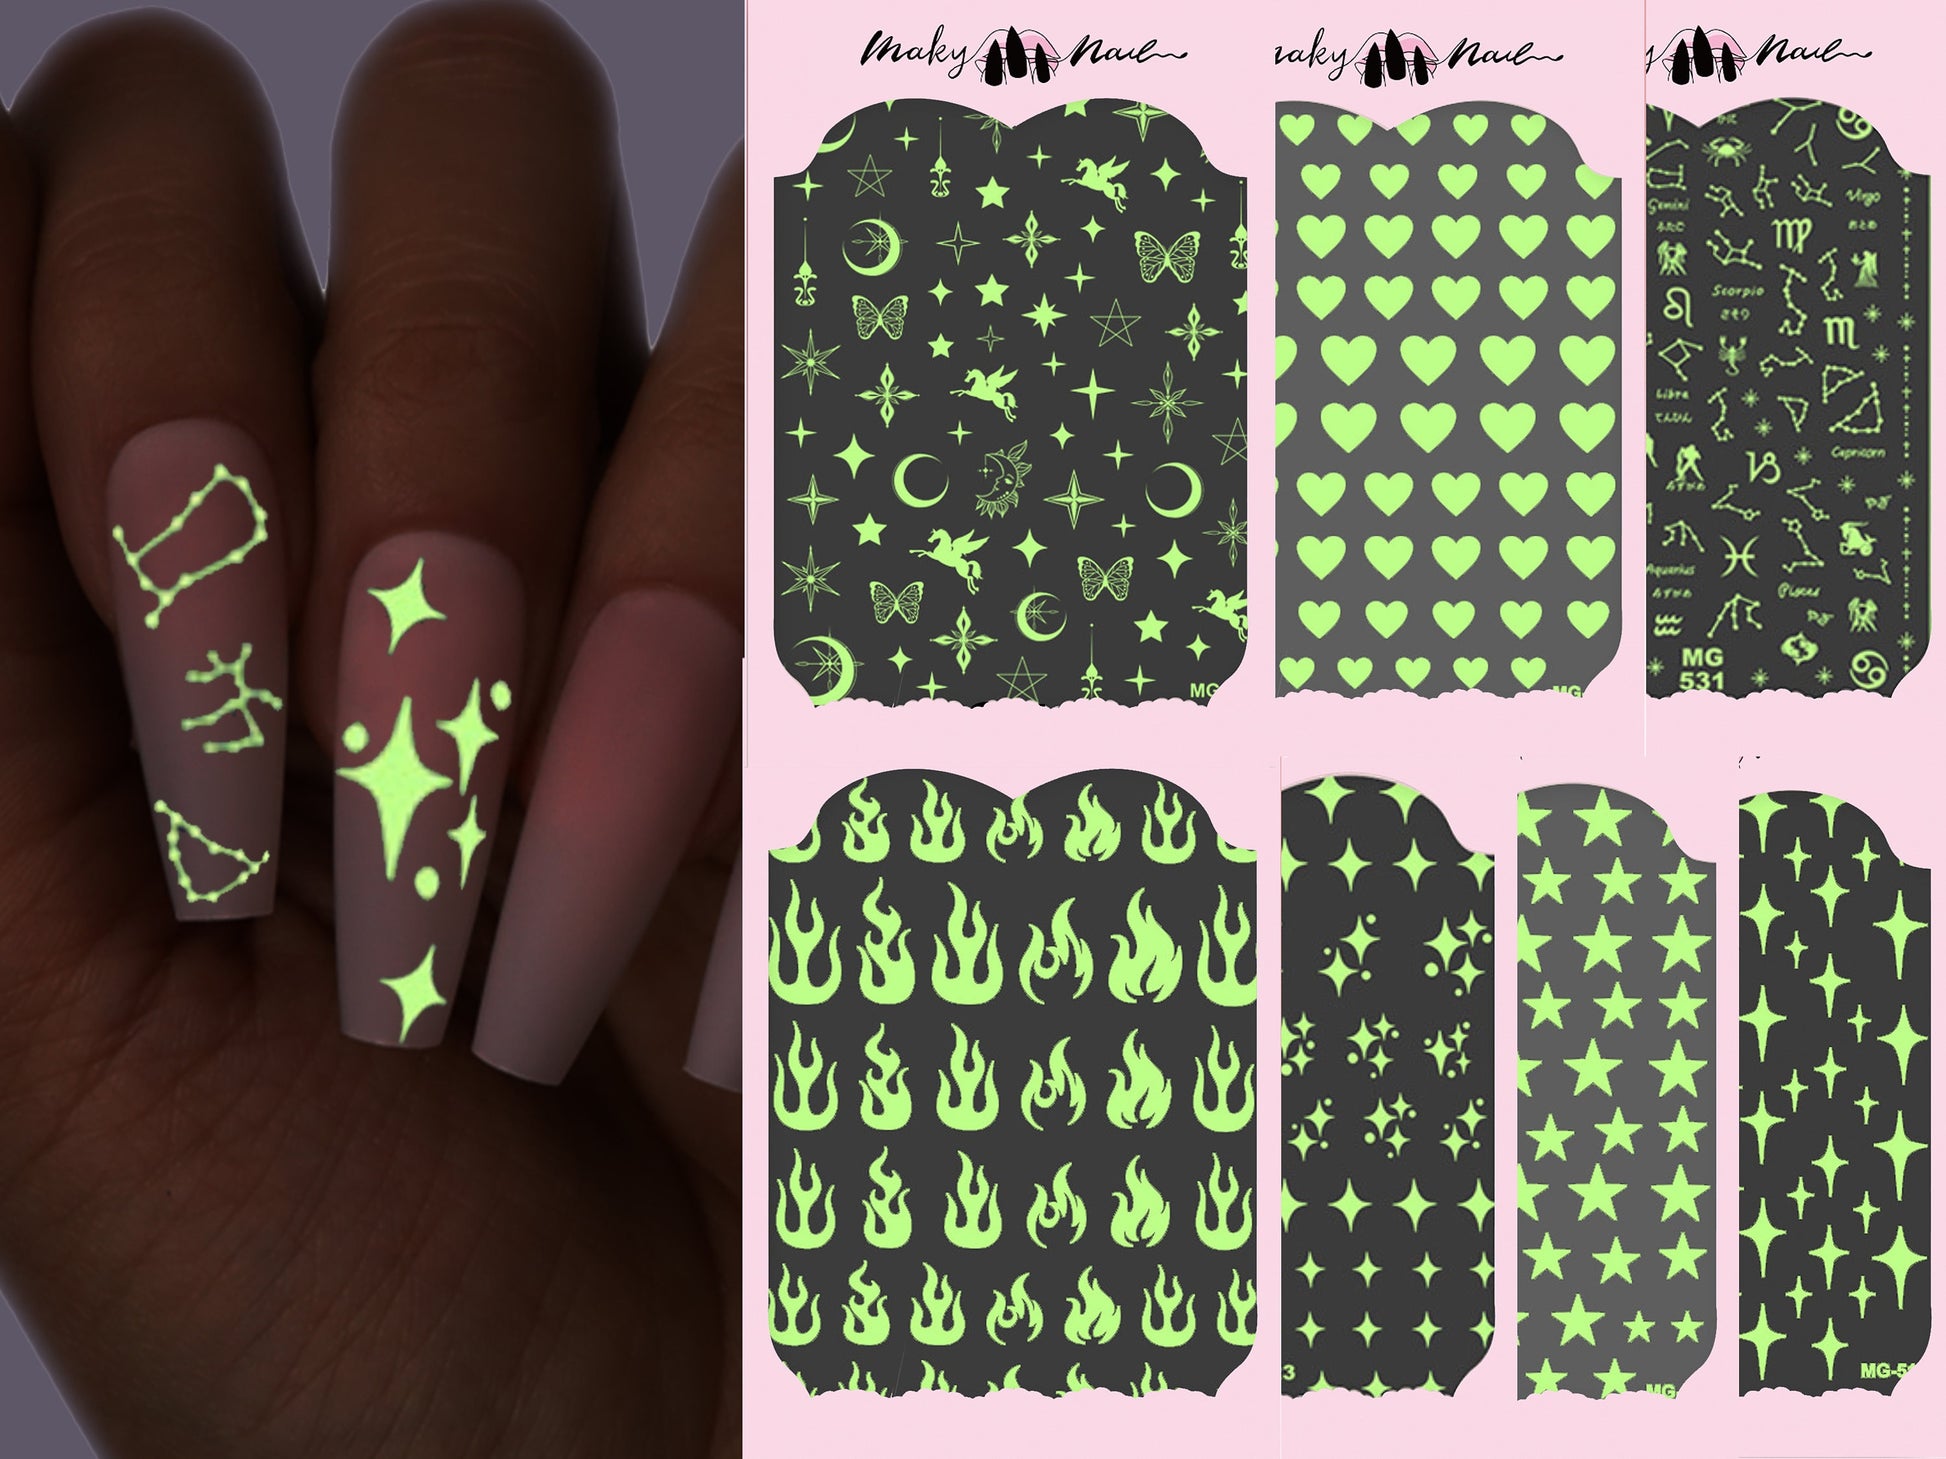 Starry Sky Luminous nail sticker/ Halloween Glow in the dark Night Life 3D Nail Art Self Adhesive Decals/ Peel off star Nails